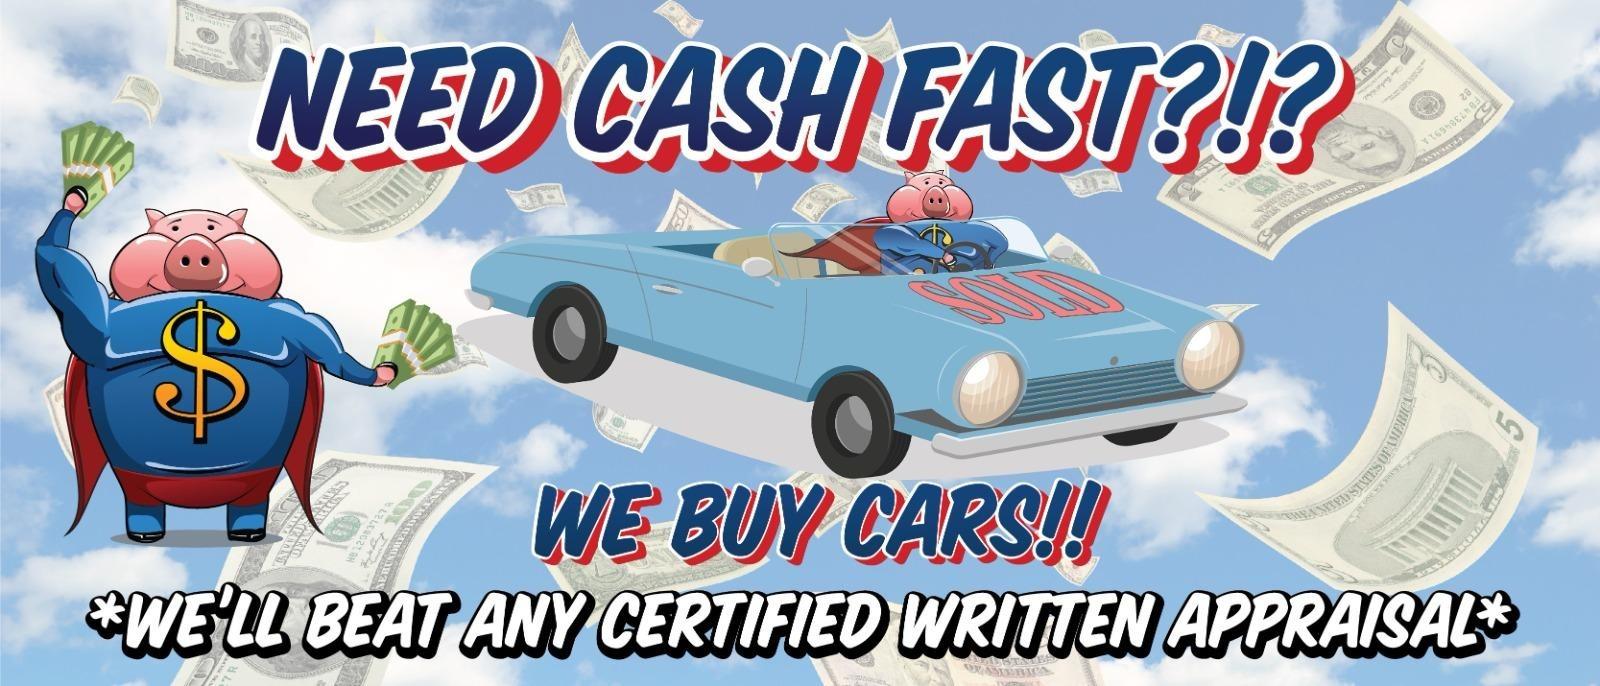 NEED CASH FAST? GLENN POLK BUYS CARS!